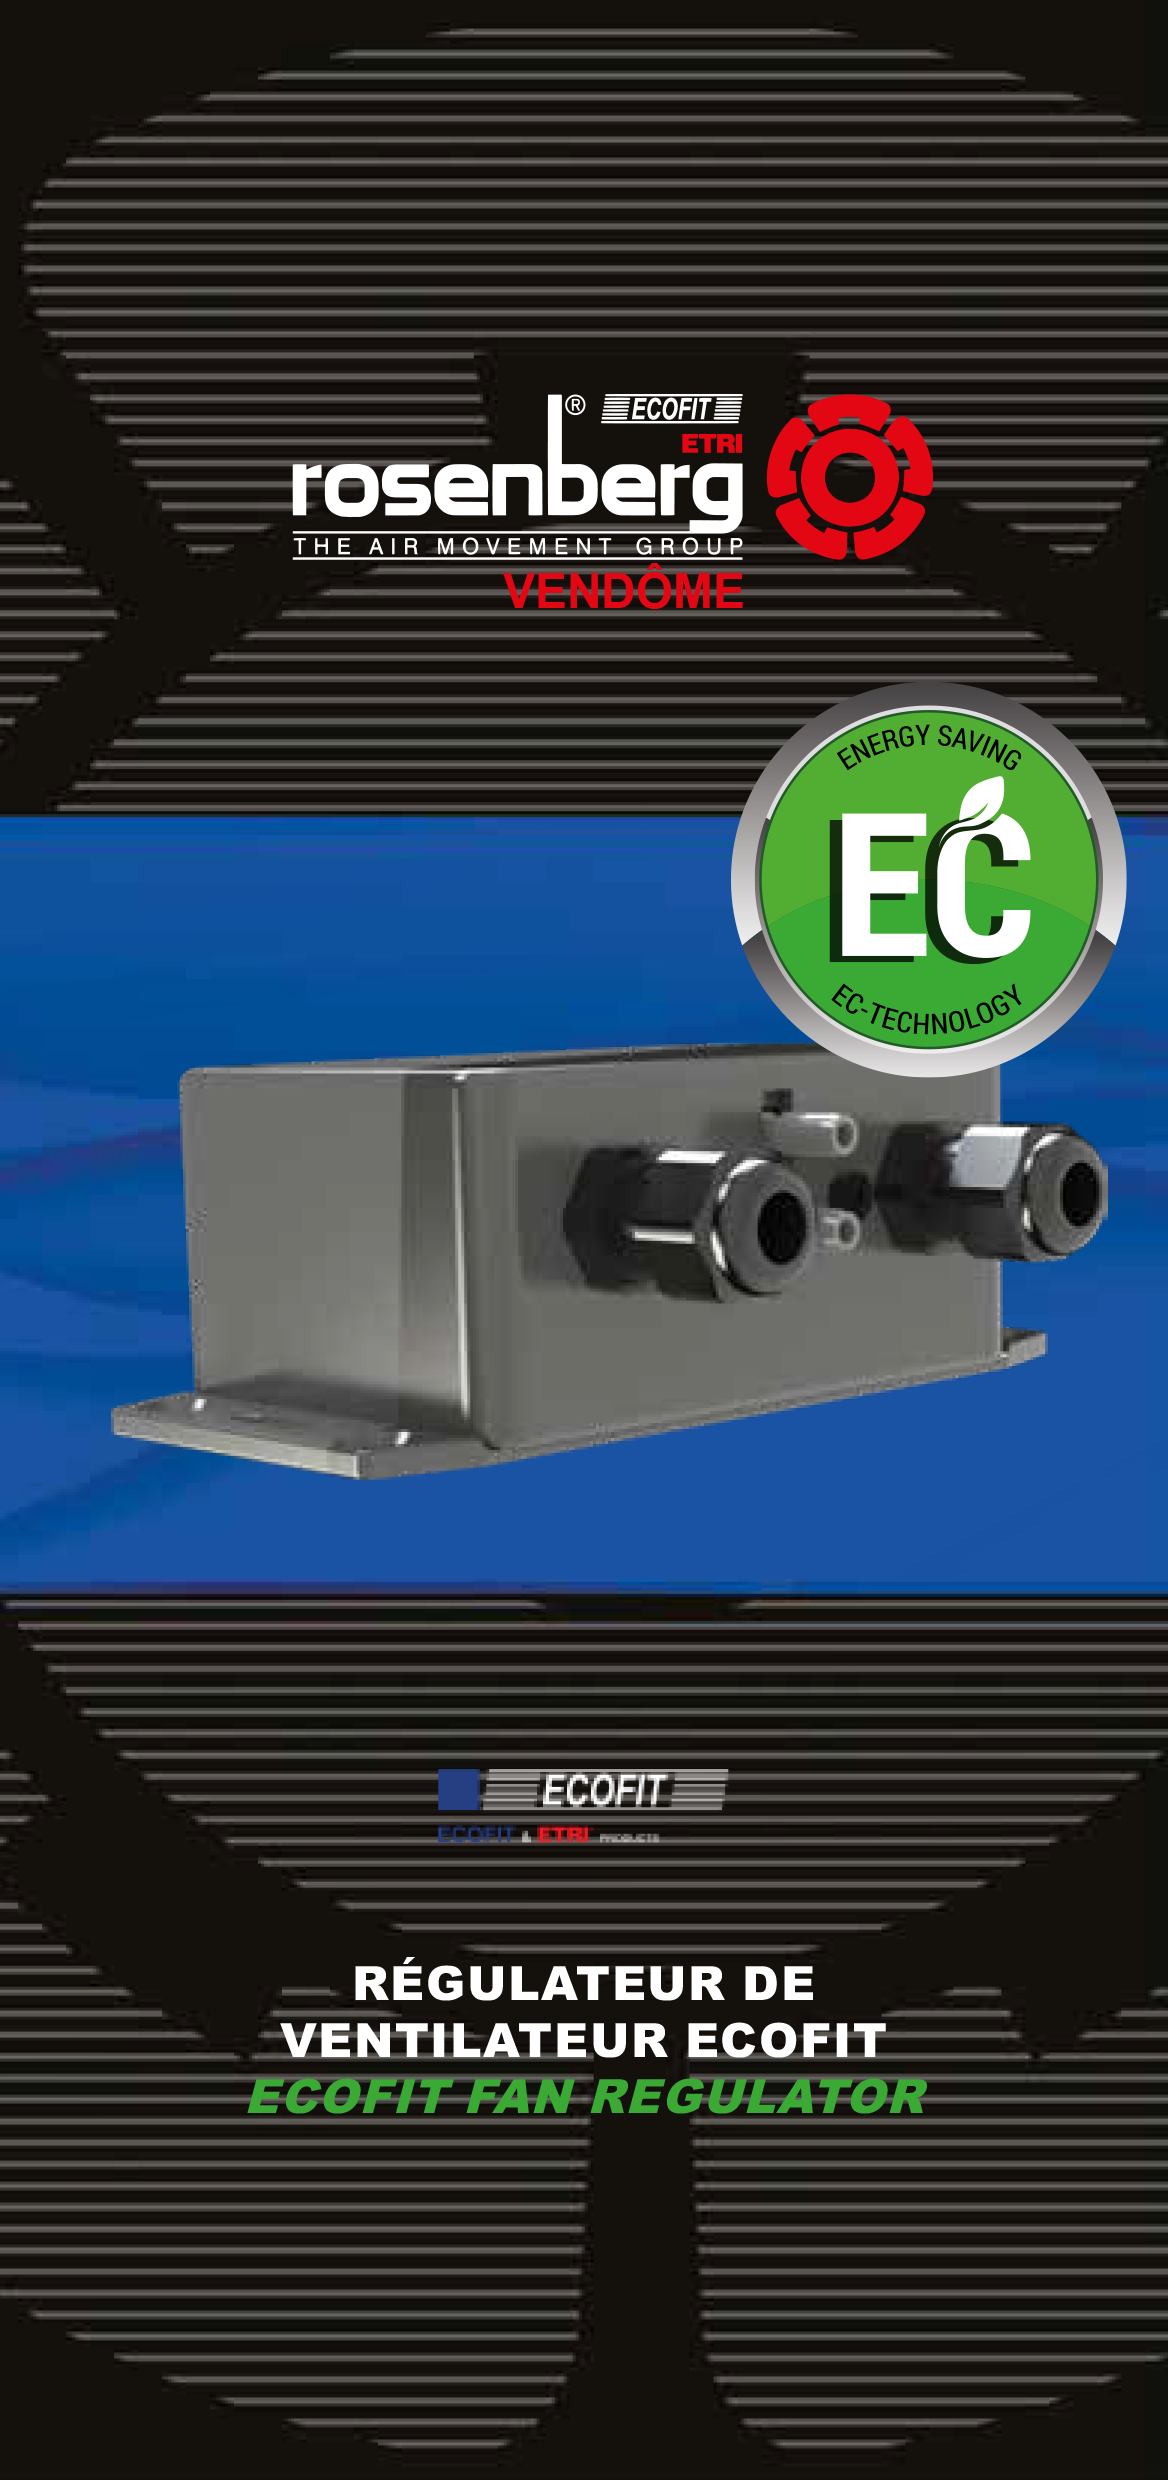 ECOFIT ventilation solution